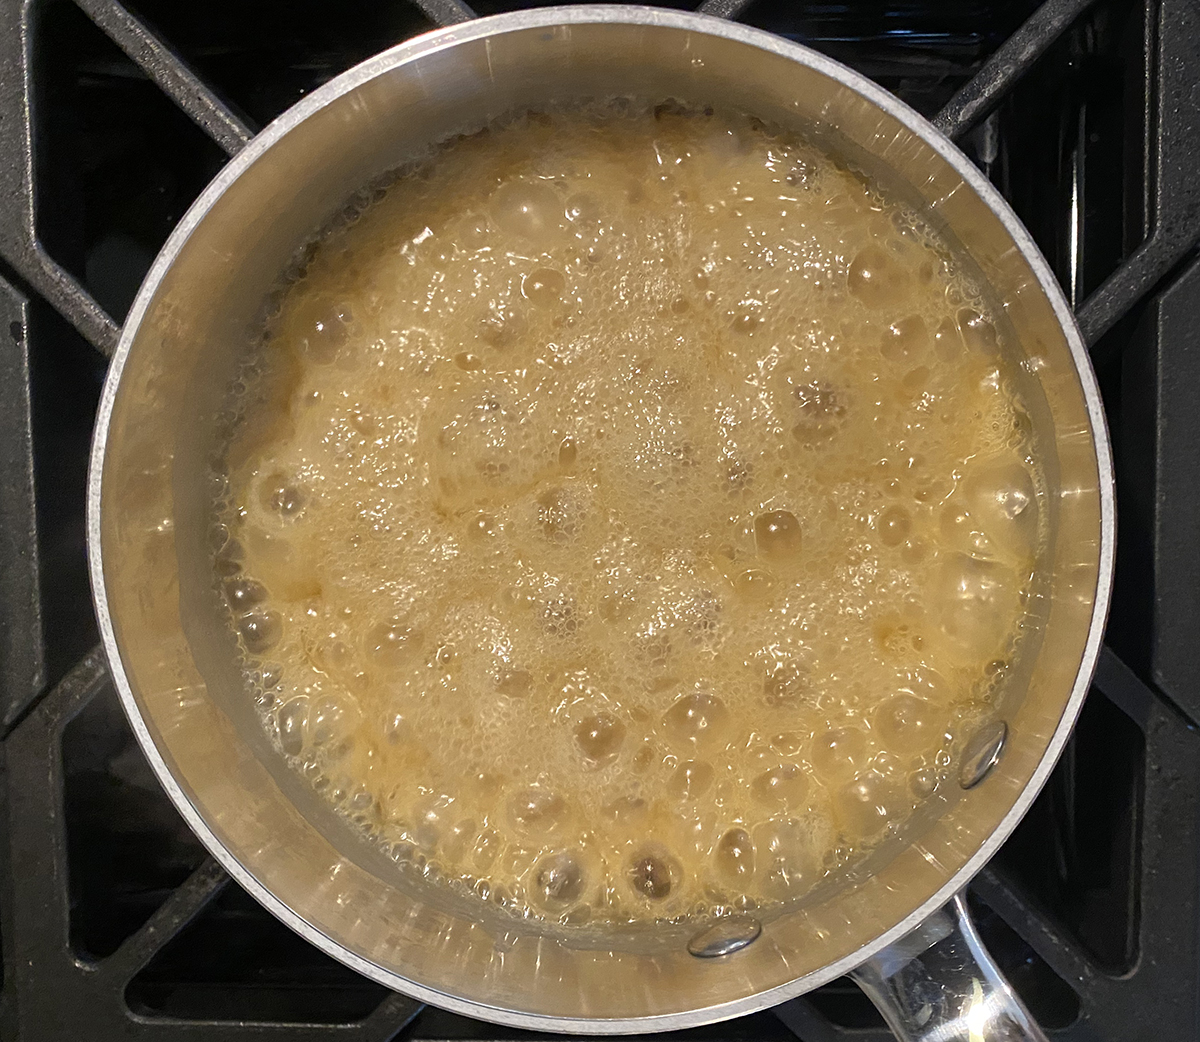 Boiling caramel sauce in a pot.